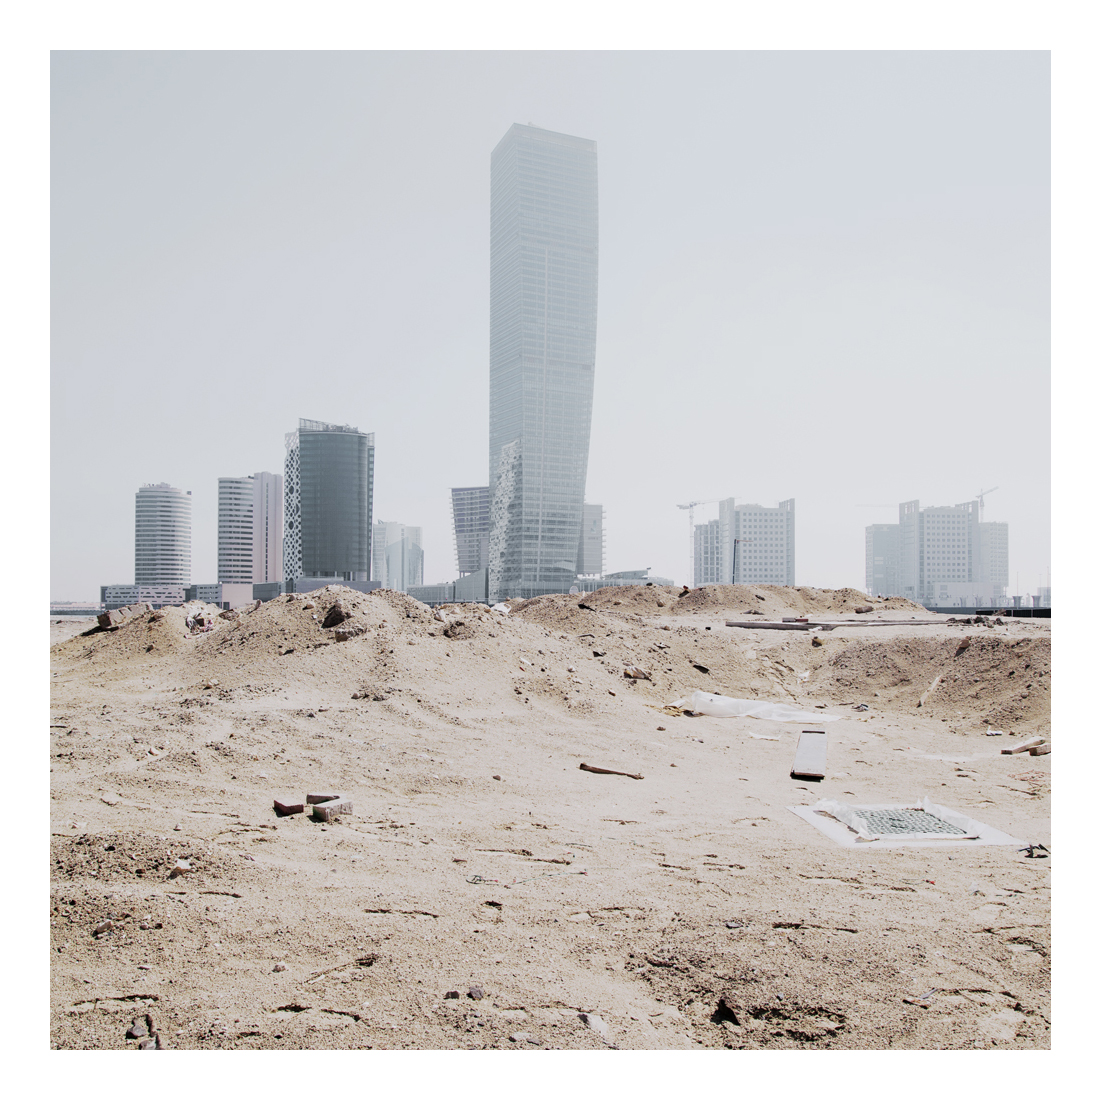 Gorgeous Windswept Photos Of Dubai’s Booming, Bloated Metropolis